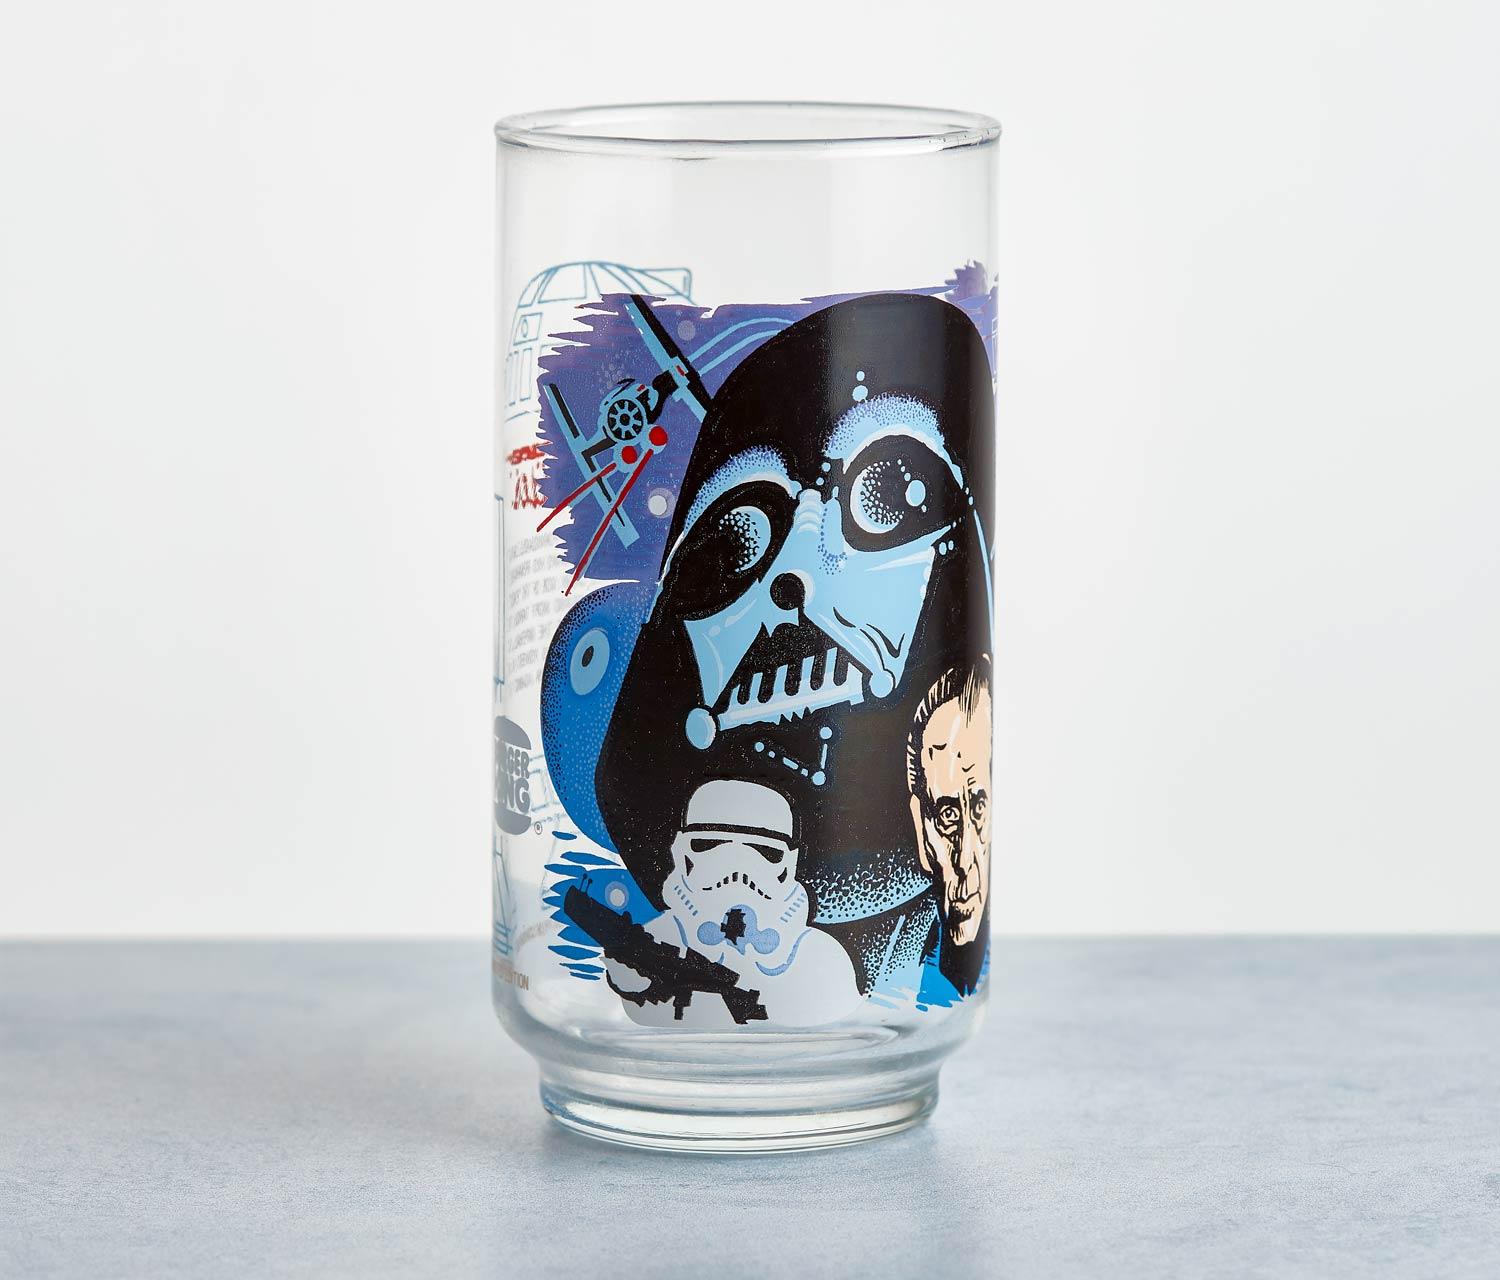 Star Wars Drinking Glasses